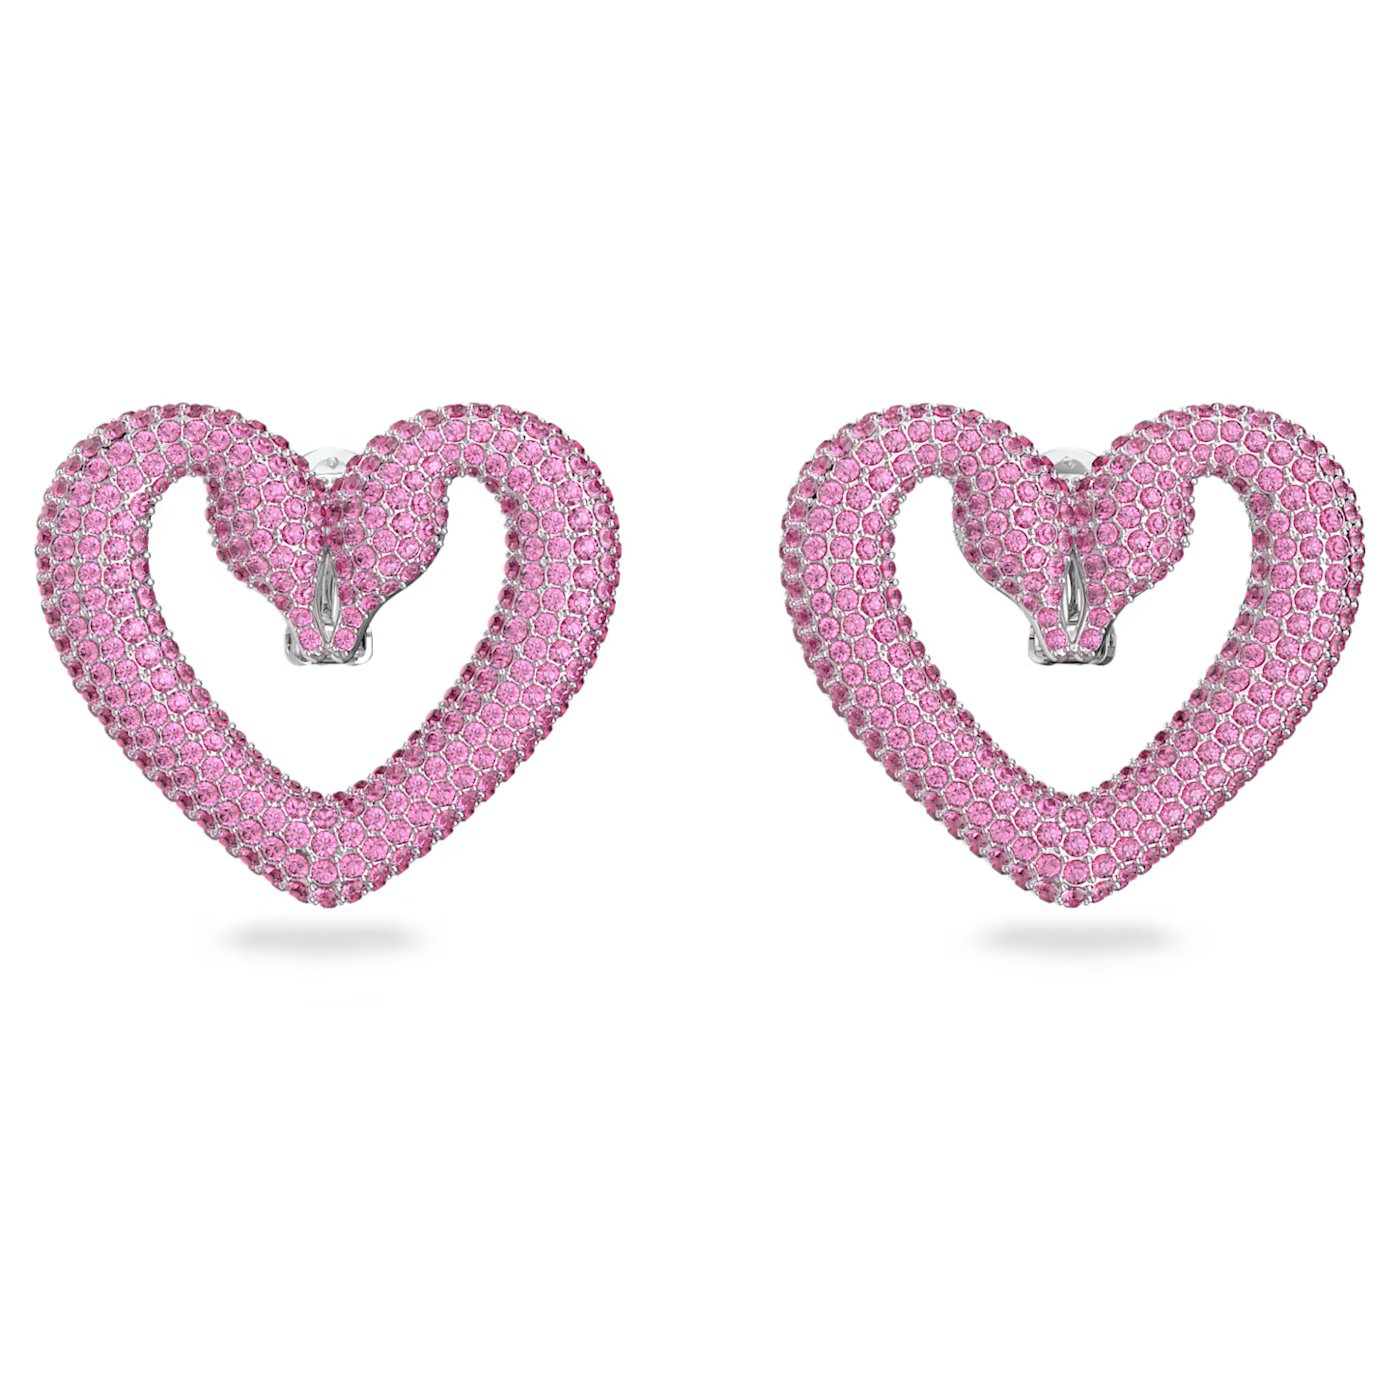 62e8dc2cc3fd3_px-una-clip-earrings--heart--large--pink--rhodium-plated-swarovski-5631171.jpg